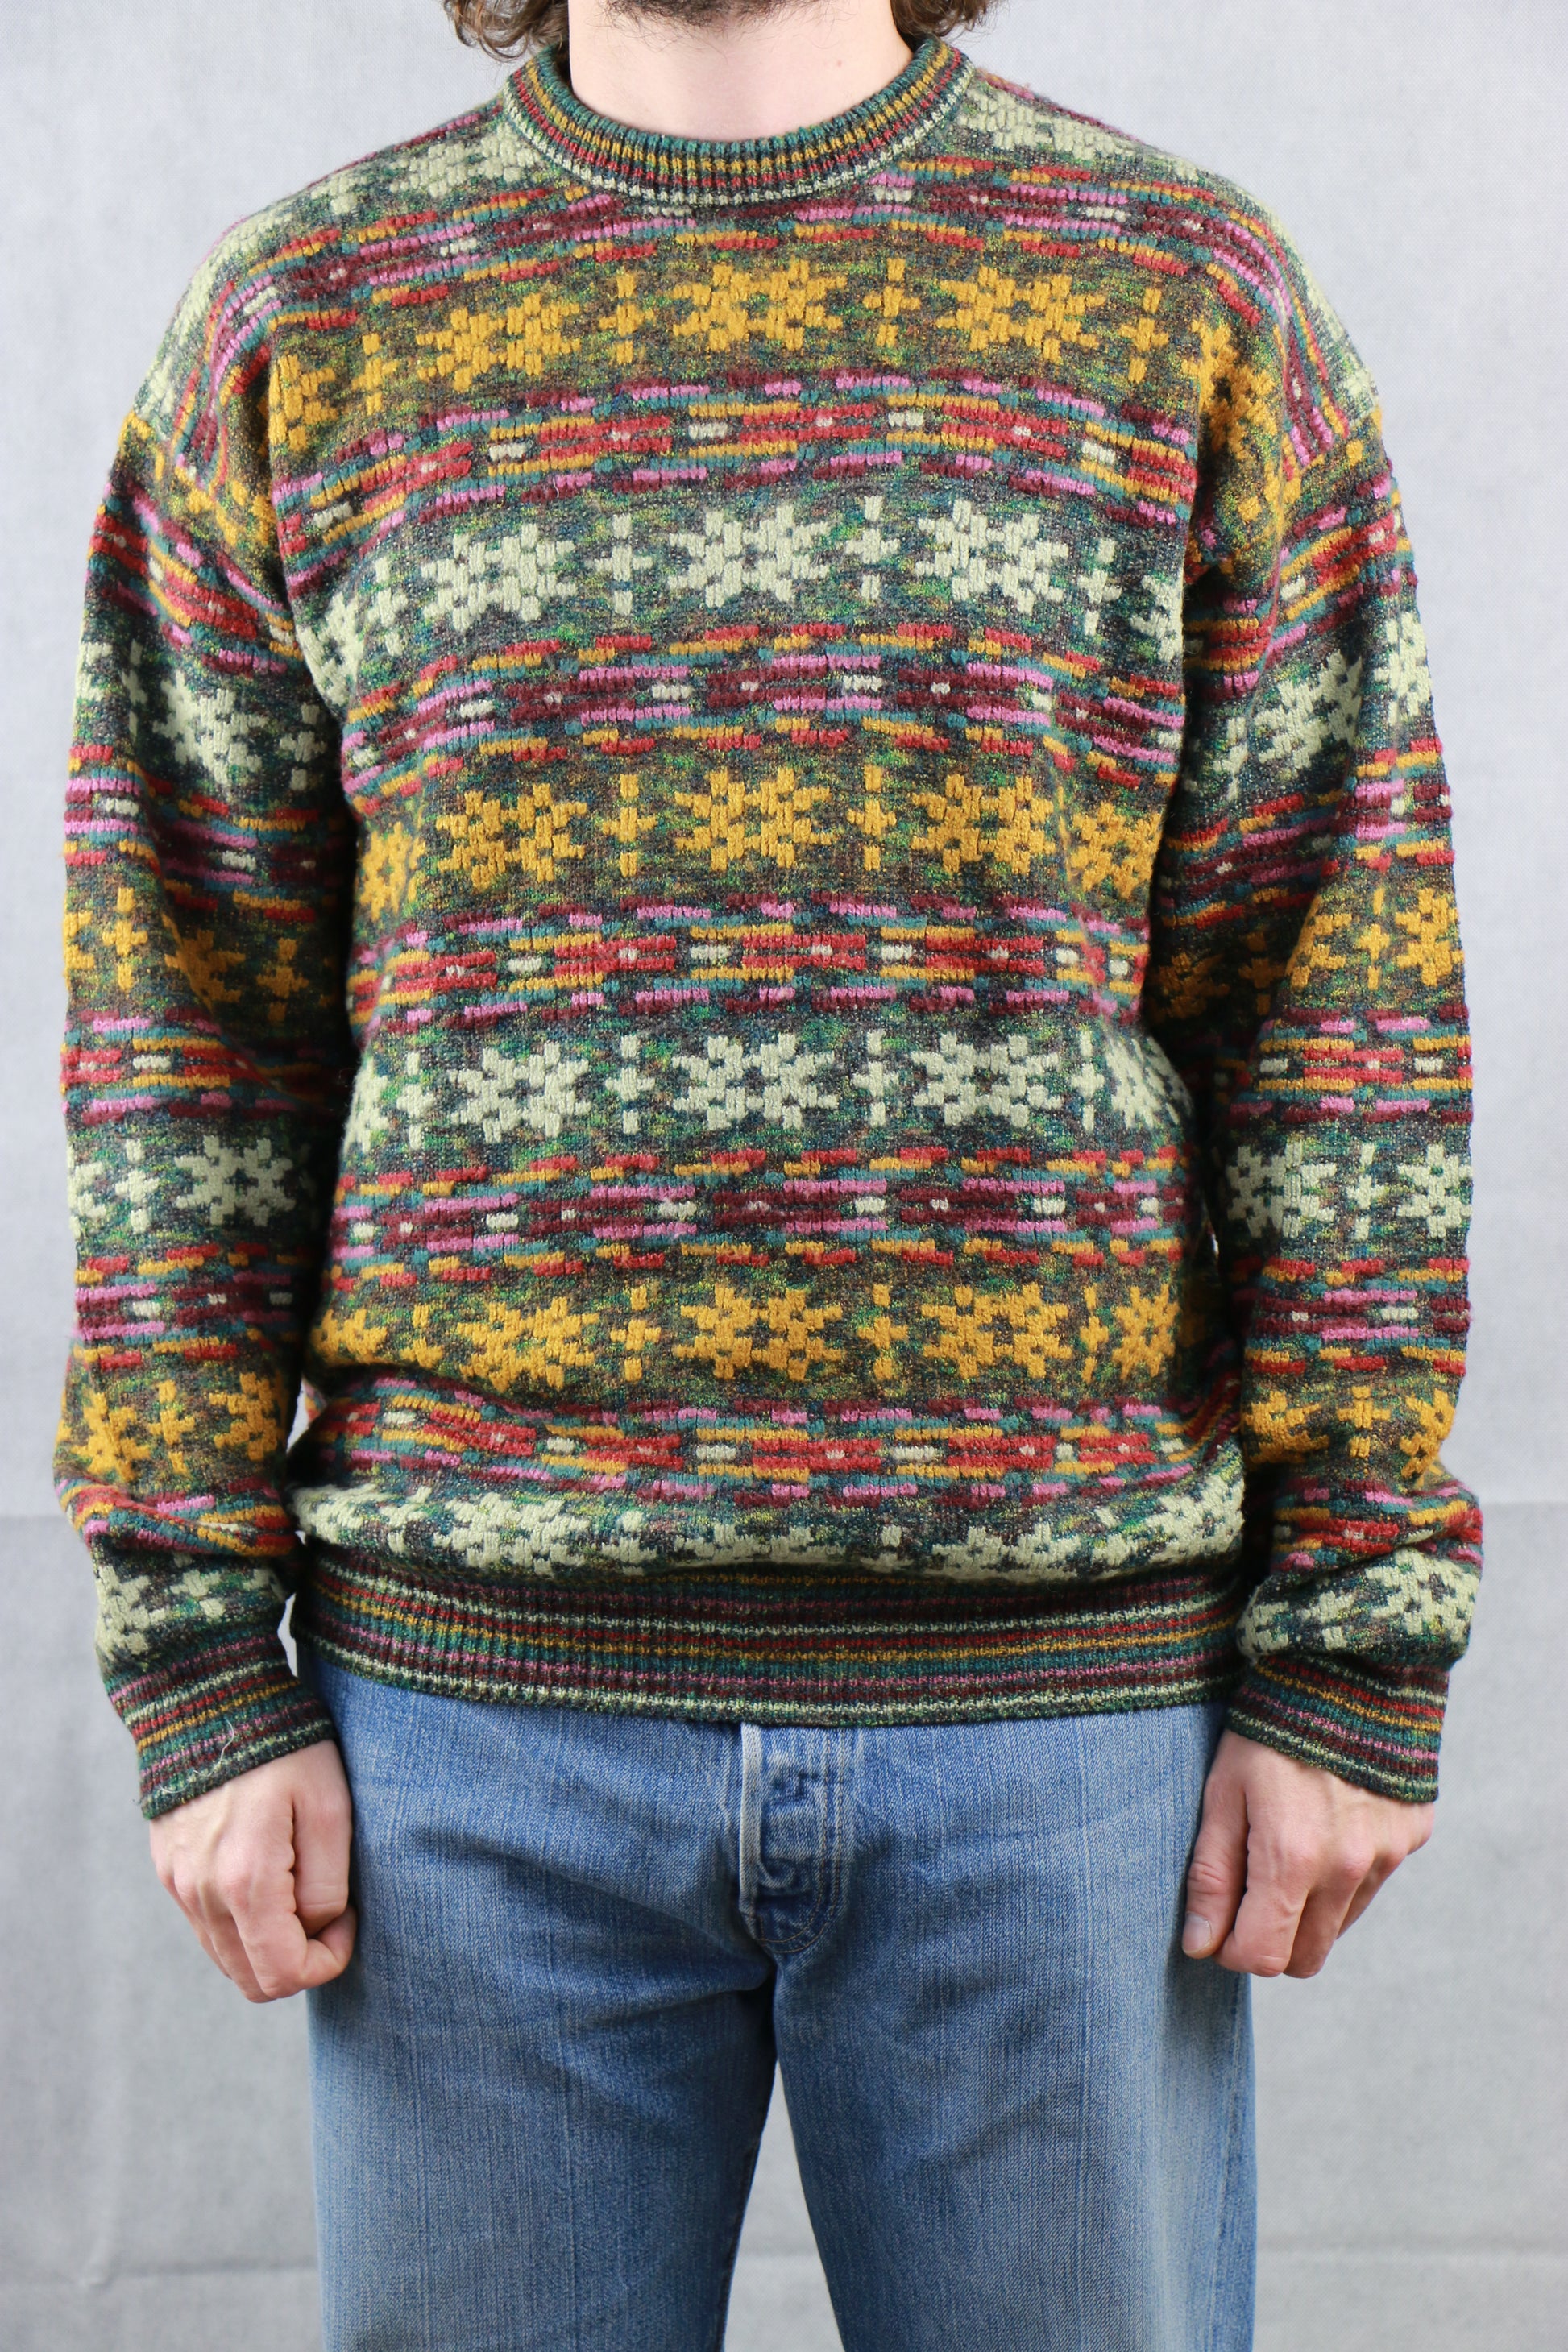 Missoni Exemple Sweater 'L', vintage store clochard92.com